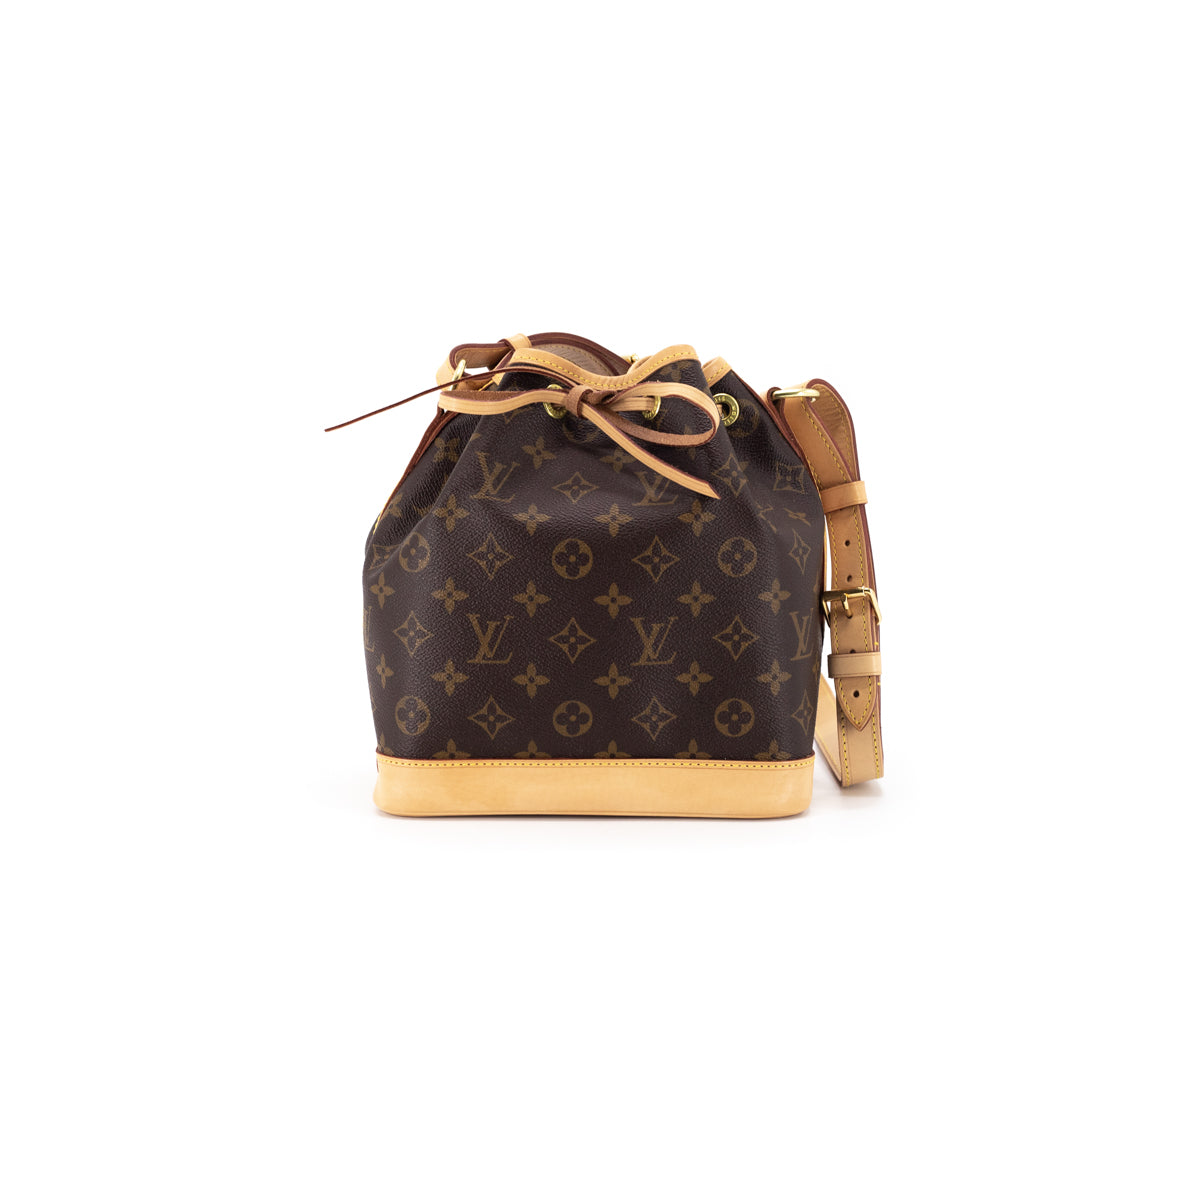 Louis Vuitton Noe BB Bags are Effortlessly Elegant, Bragmybag